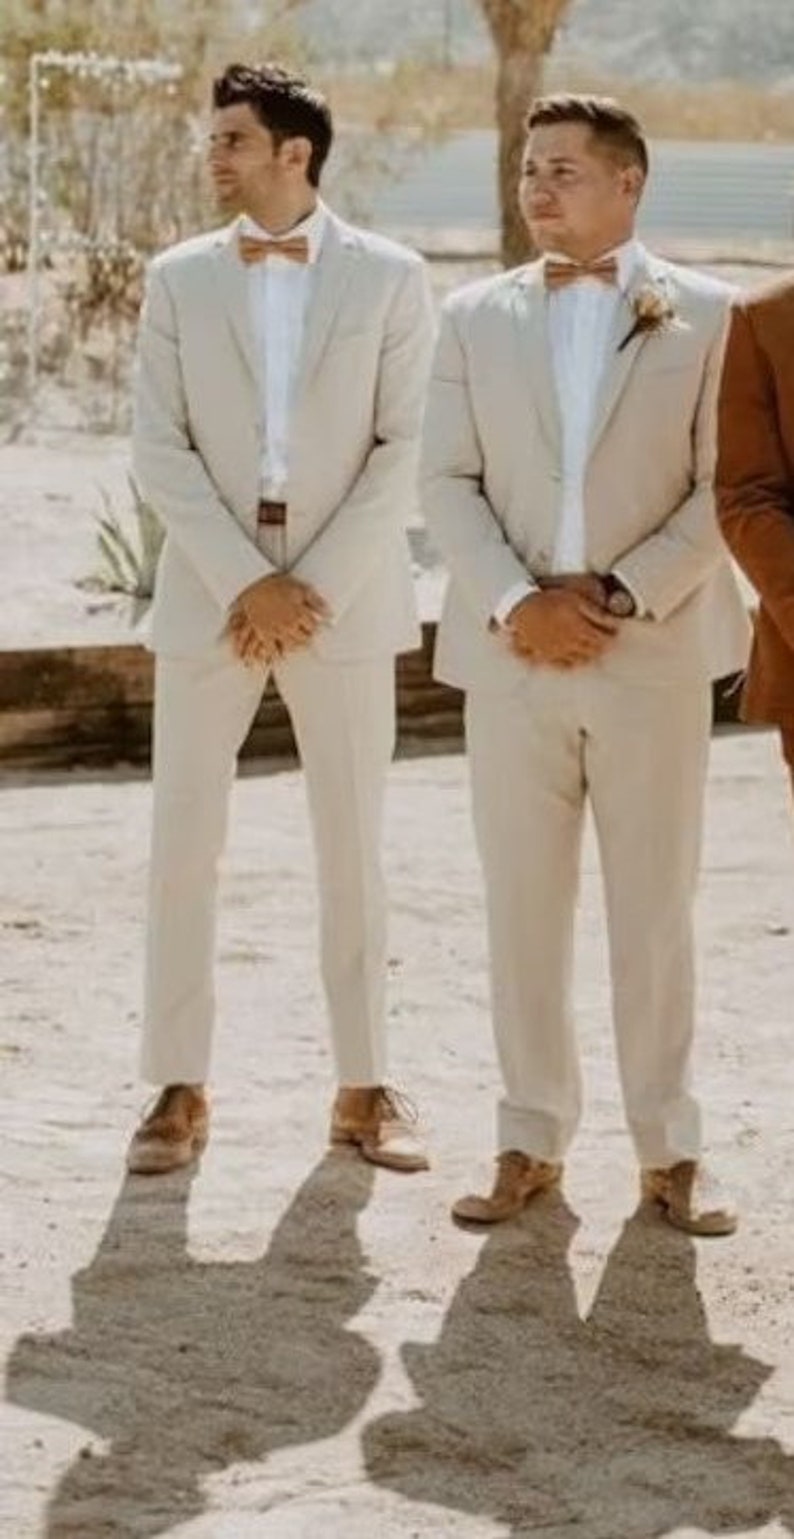 Bespoke suit-man rustic 2 piece suit-dinner, prom, party wear suit-wedding suit for groom & groomsmen-men's beige suits-beach wedding suit style 2 beige suit